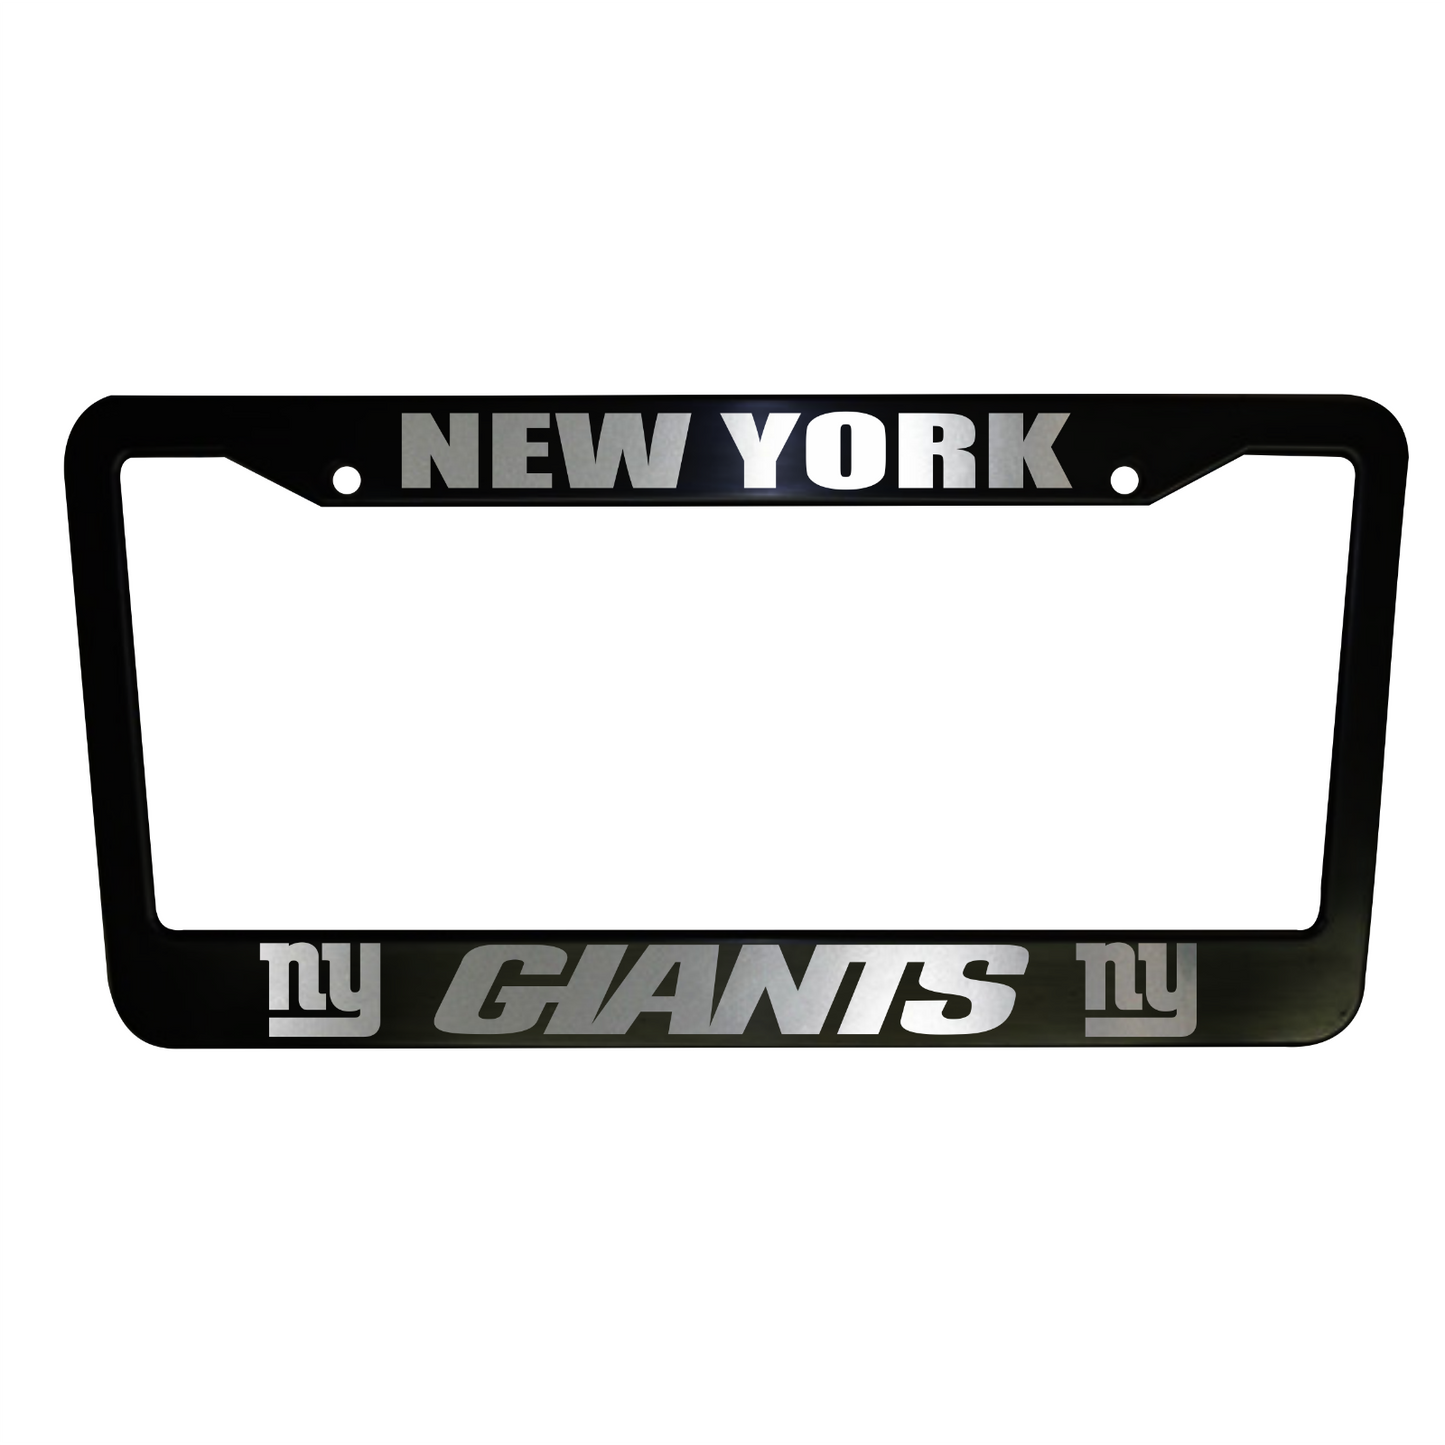 Set of 2 New York Giants Plastic or Aluminum Car License Plate Frames Black Truck Parts Vehicle Accessories Auto Decor